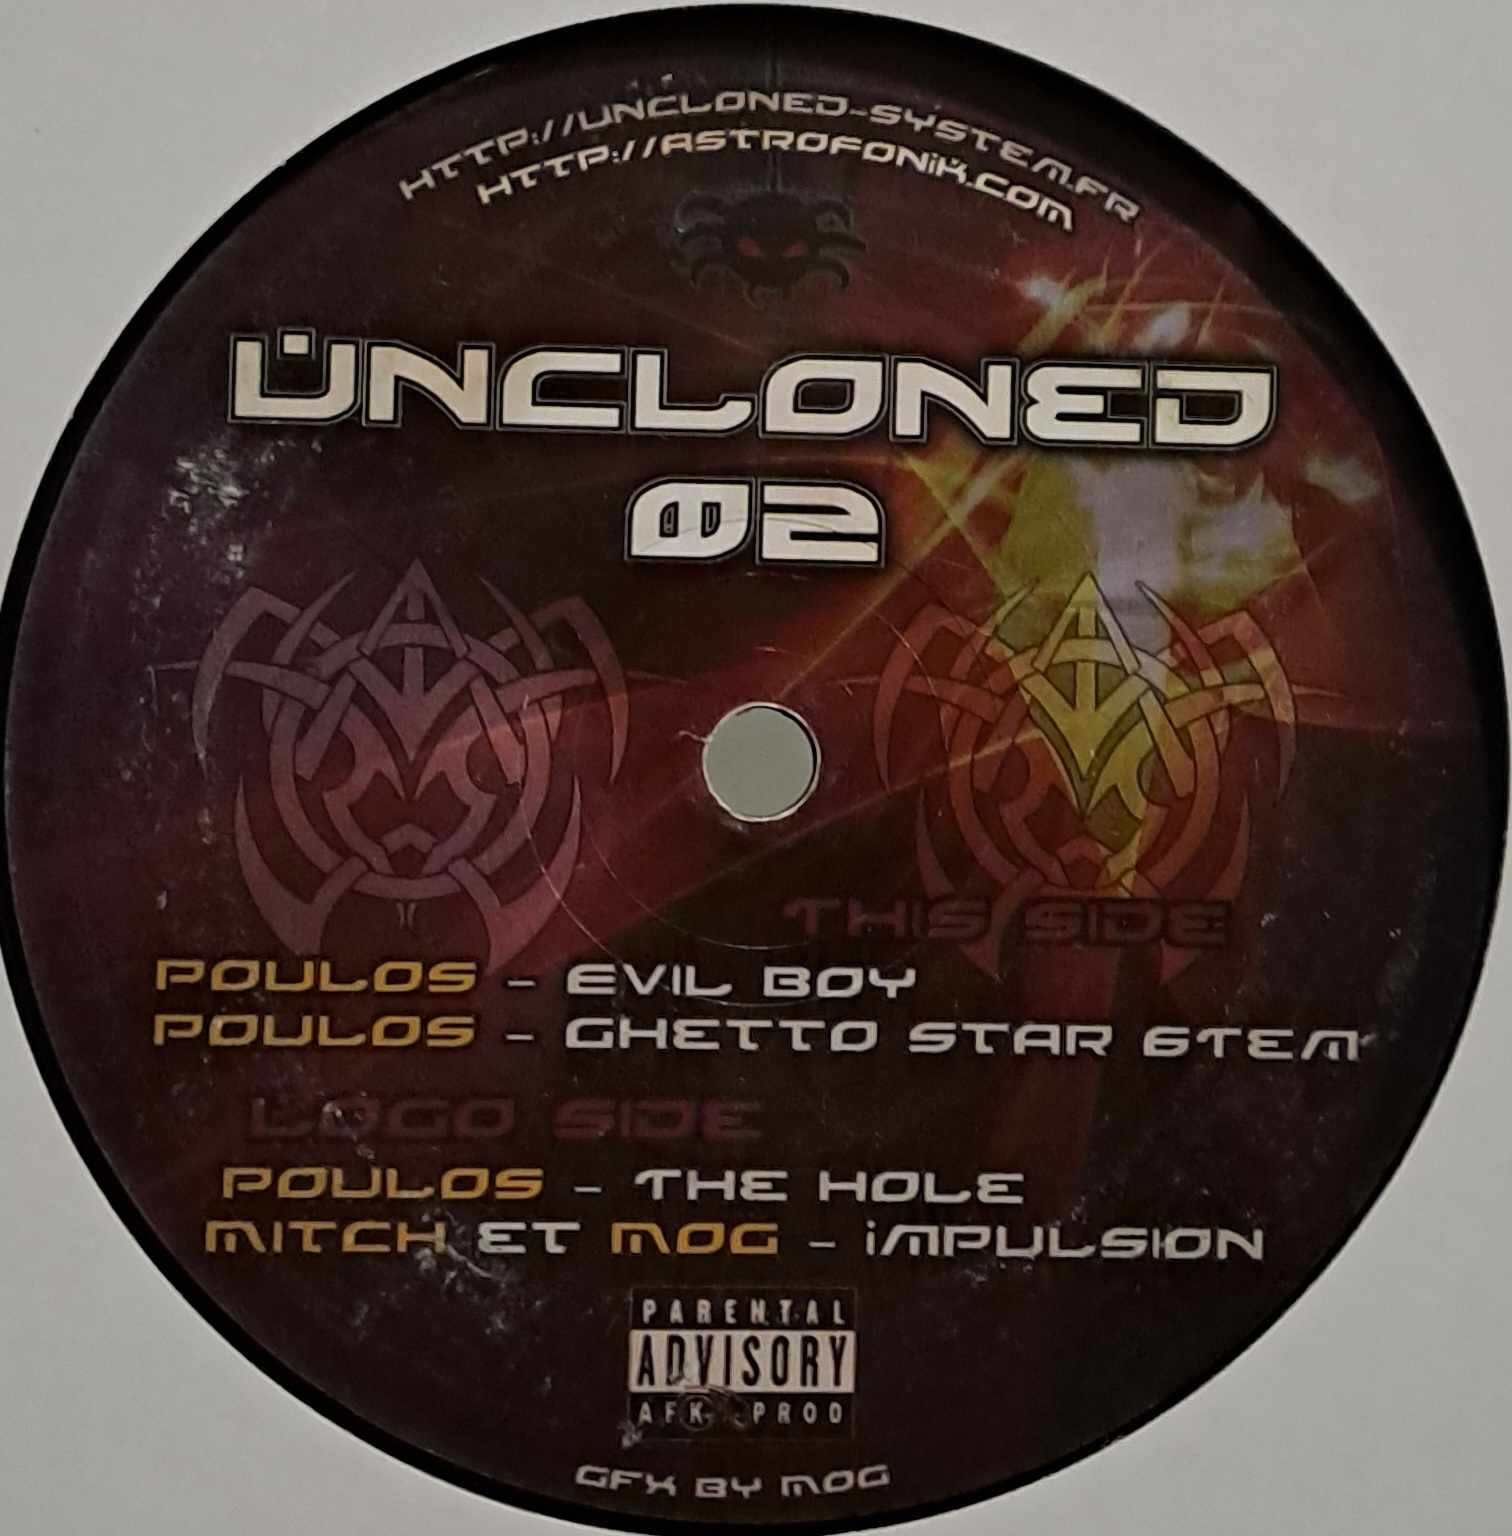 Uncloned 02 - vinyle tribecore